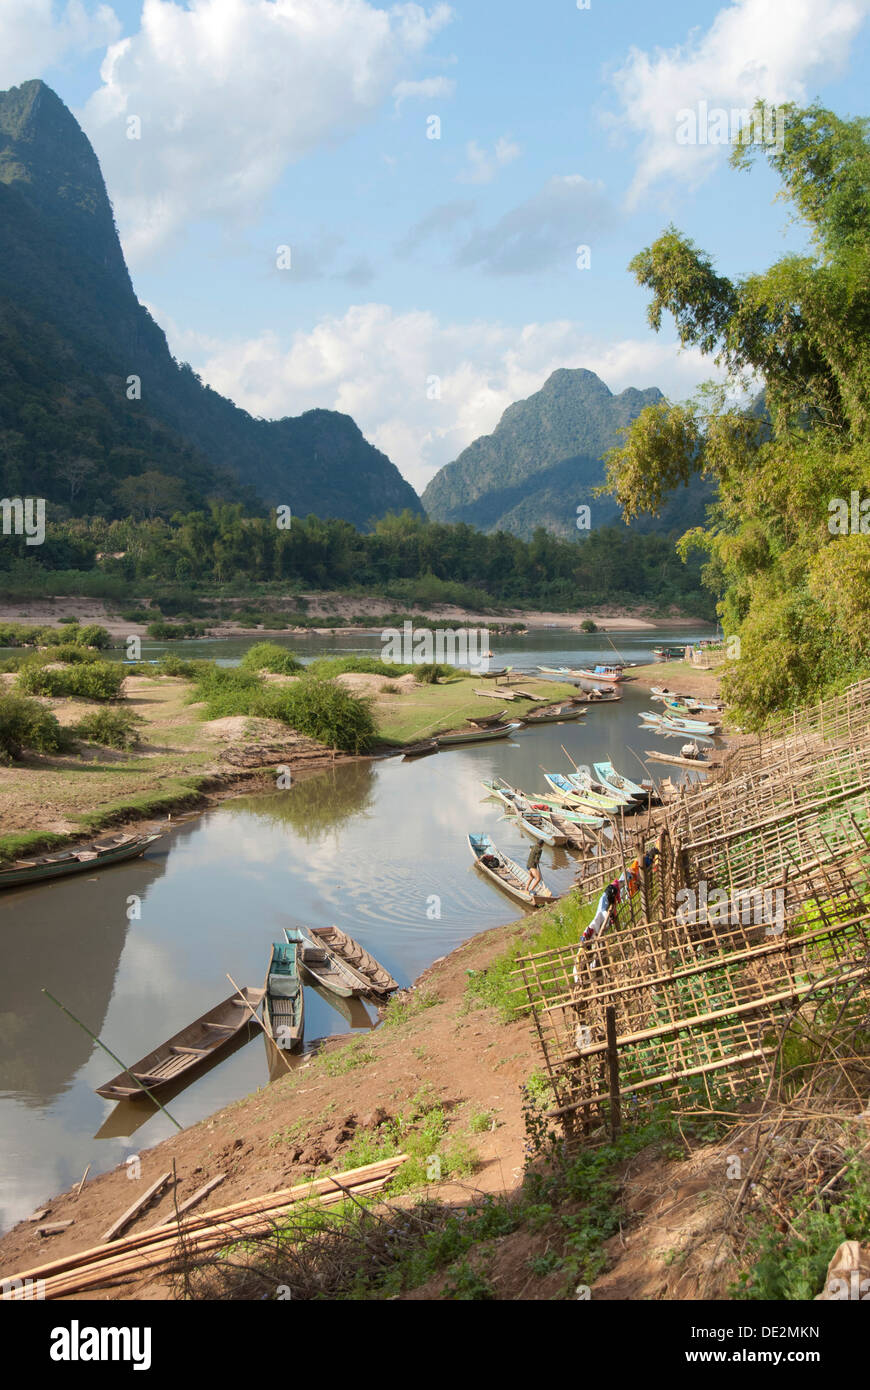 Flusslandschaft, Boote am Ufer, Nam Ou Fluss, Muang Ngoi Kao Luang Prabang Provinz, Laos, Südostasien, Asien Stockfoto